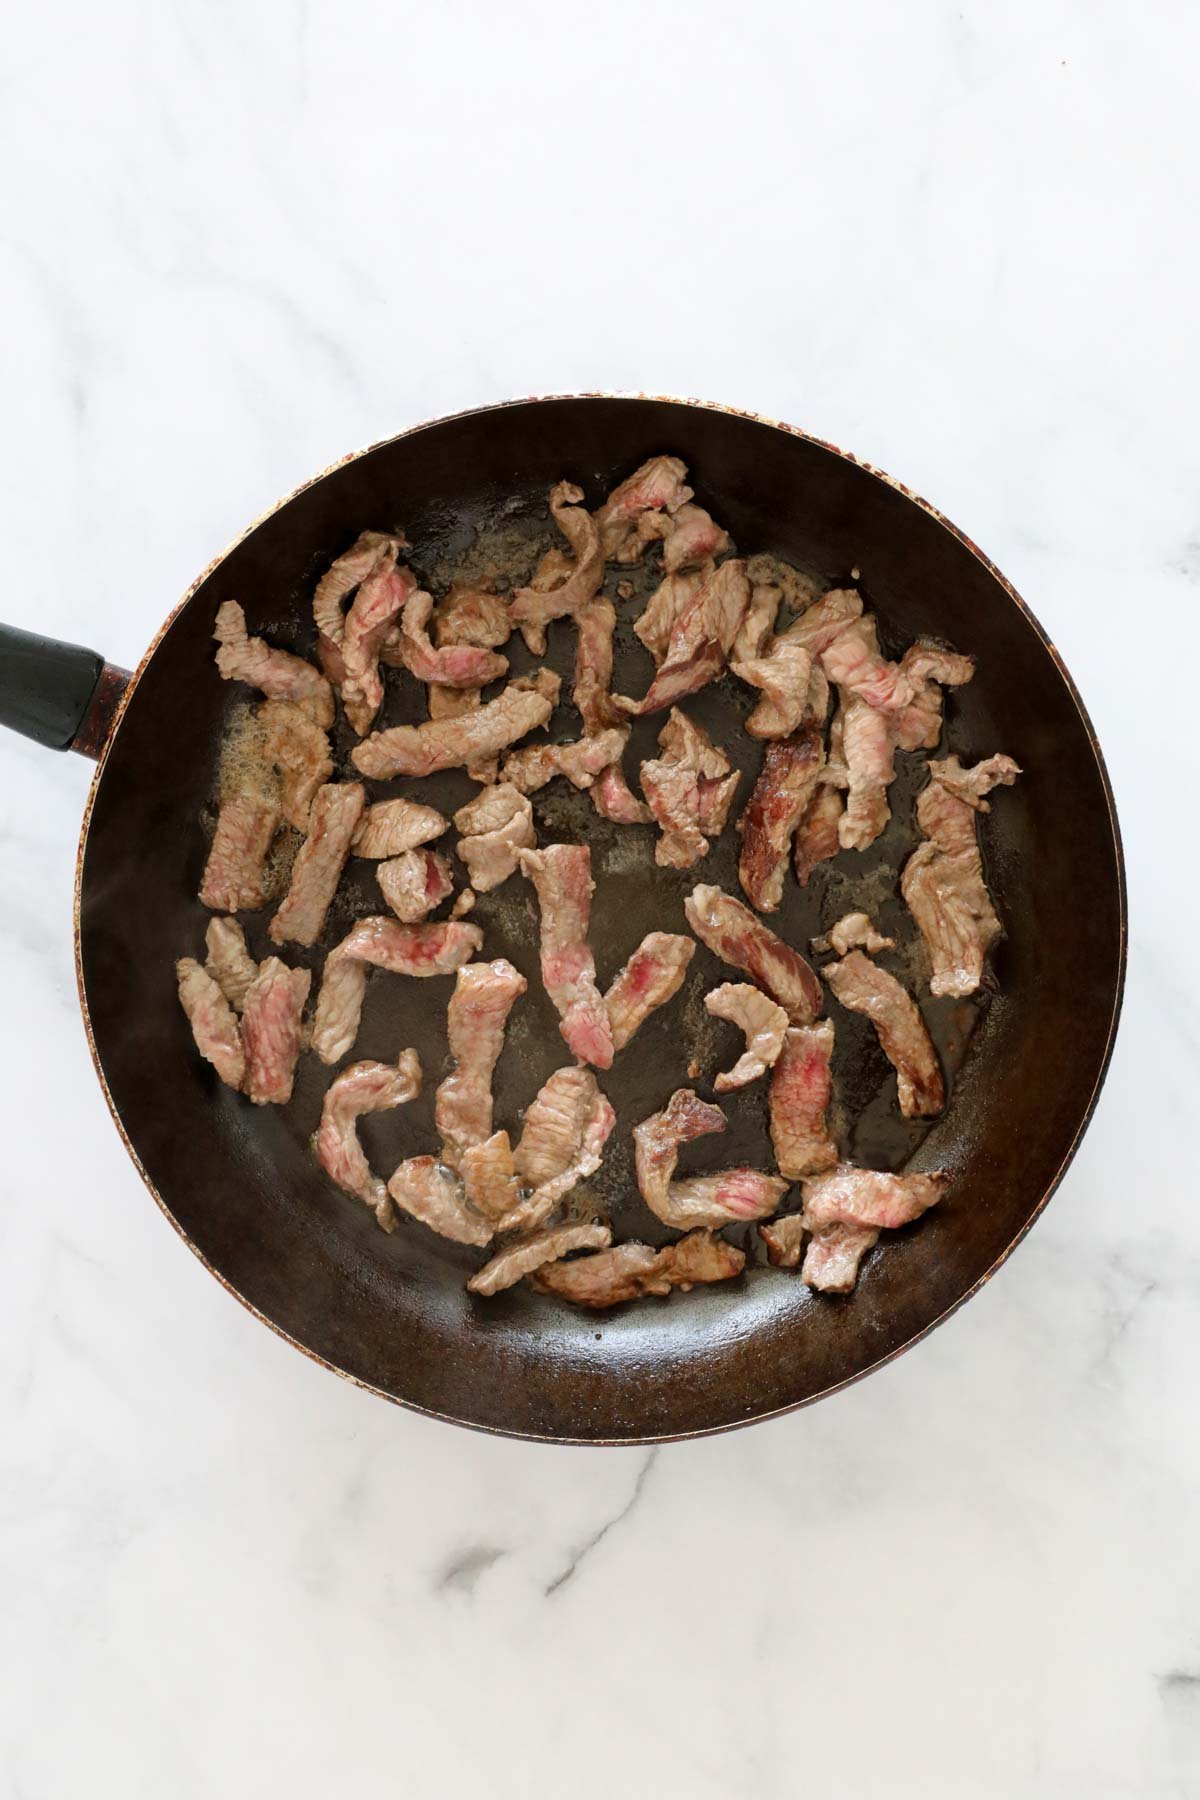 Strips of steak sauteing in a frying pan.